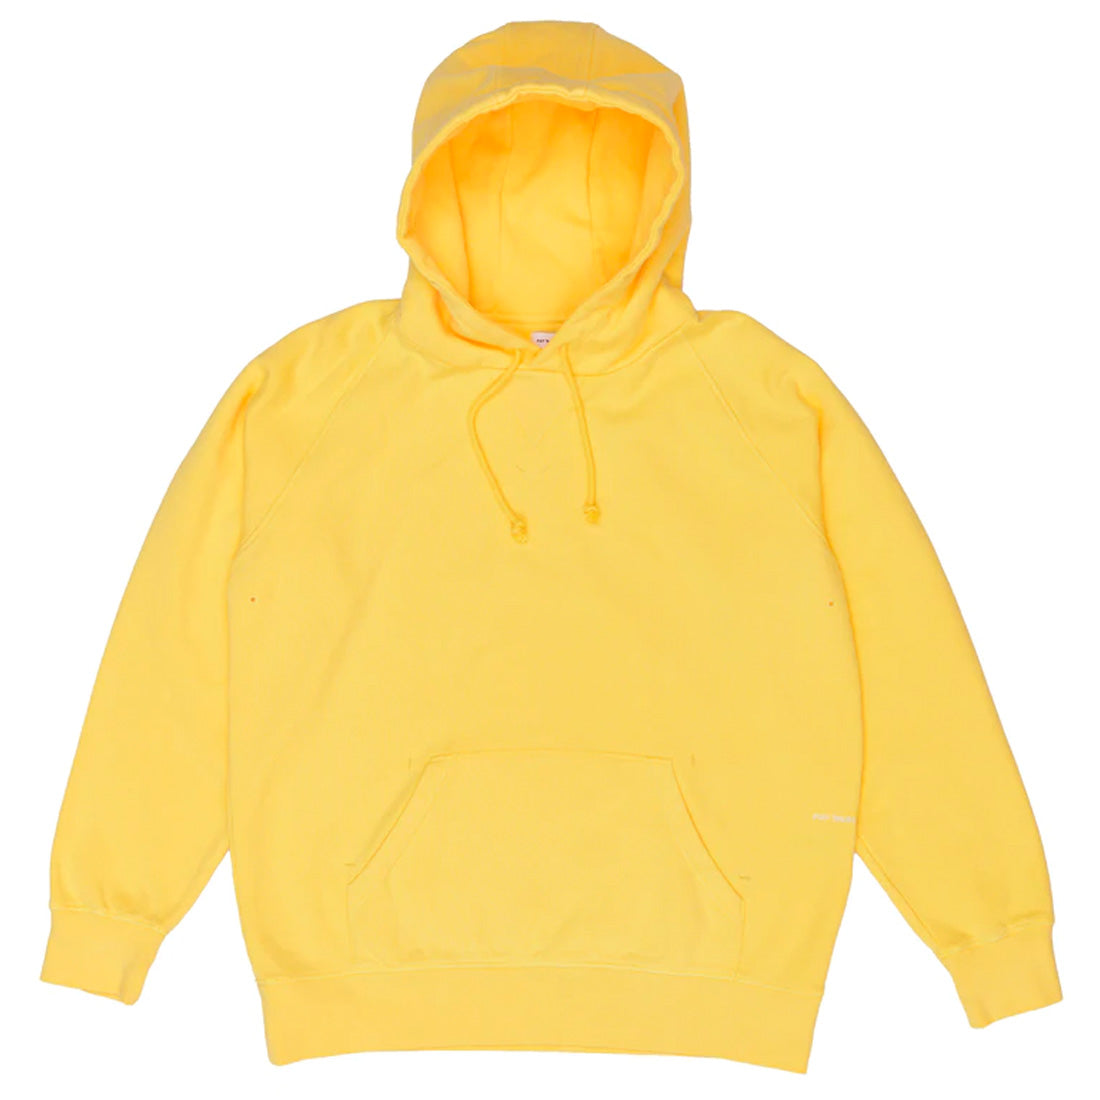 POP Trading Company Logo Hooded Sweatshirt - Snapdragon Yellow